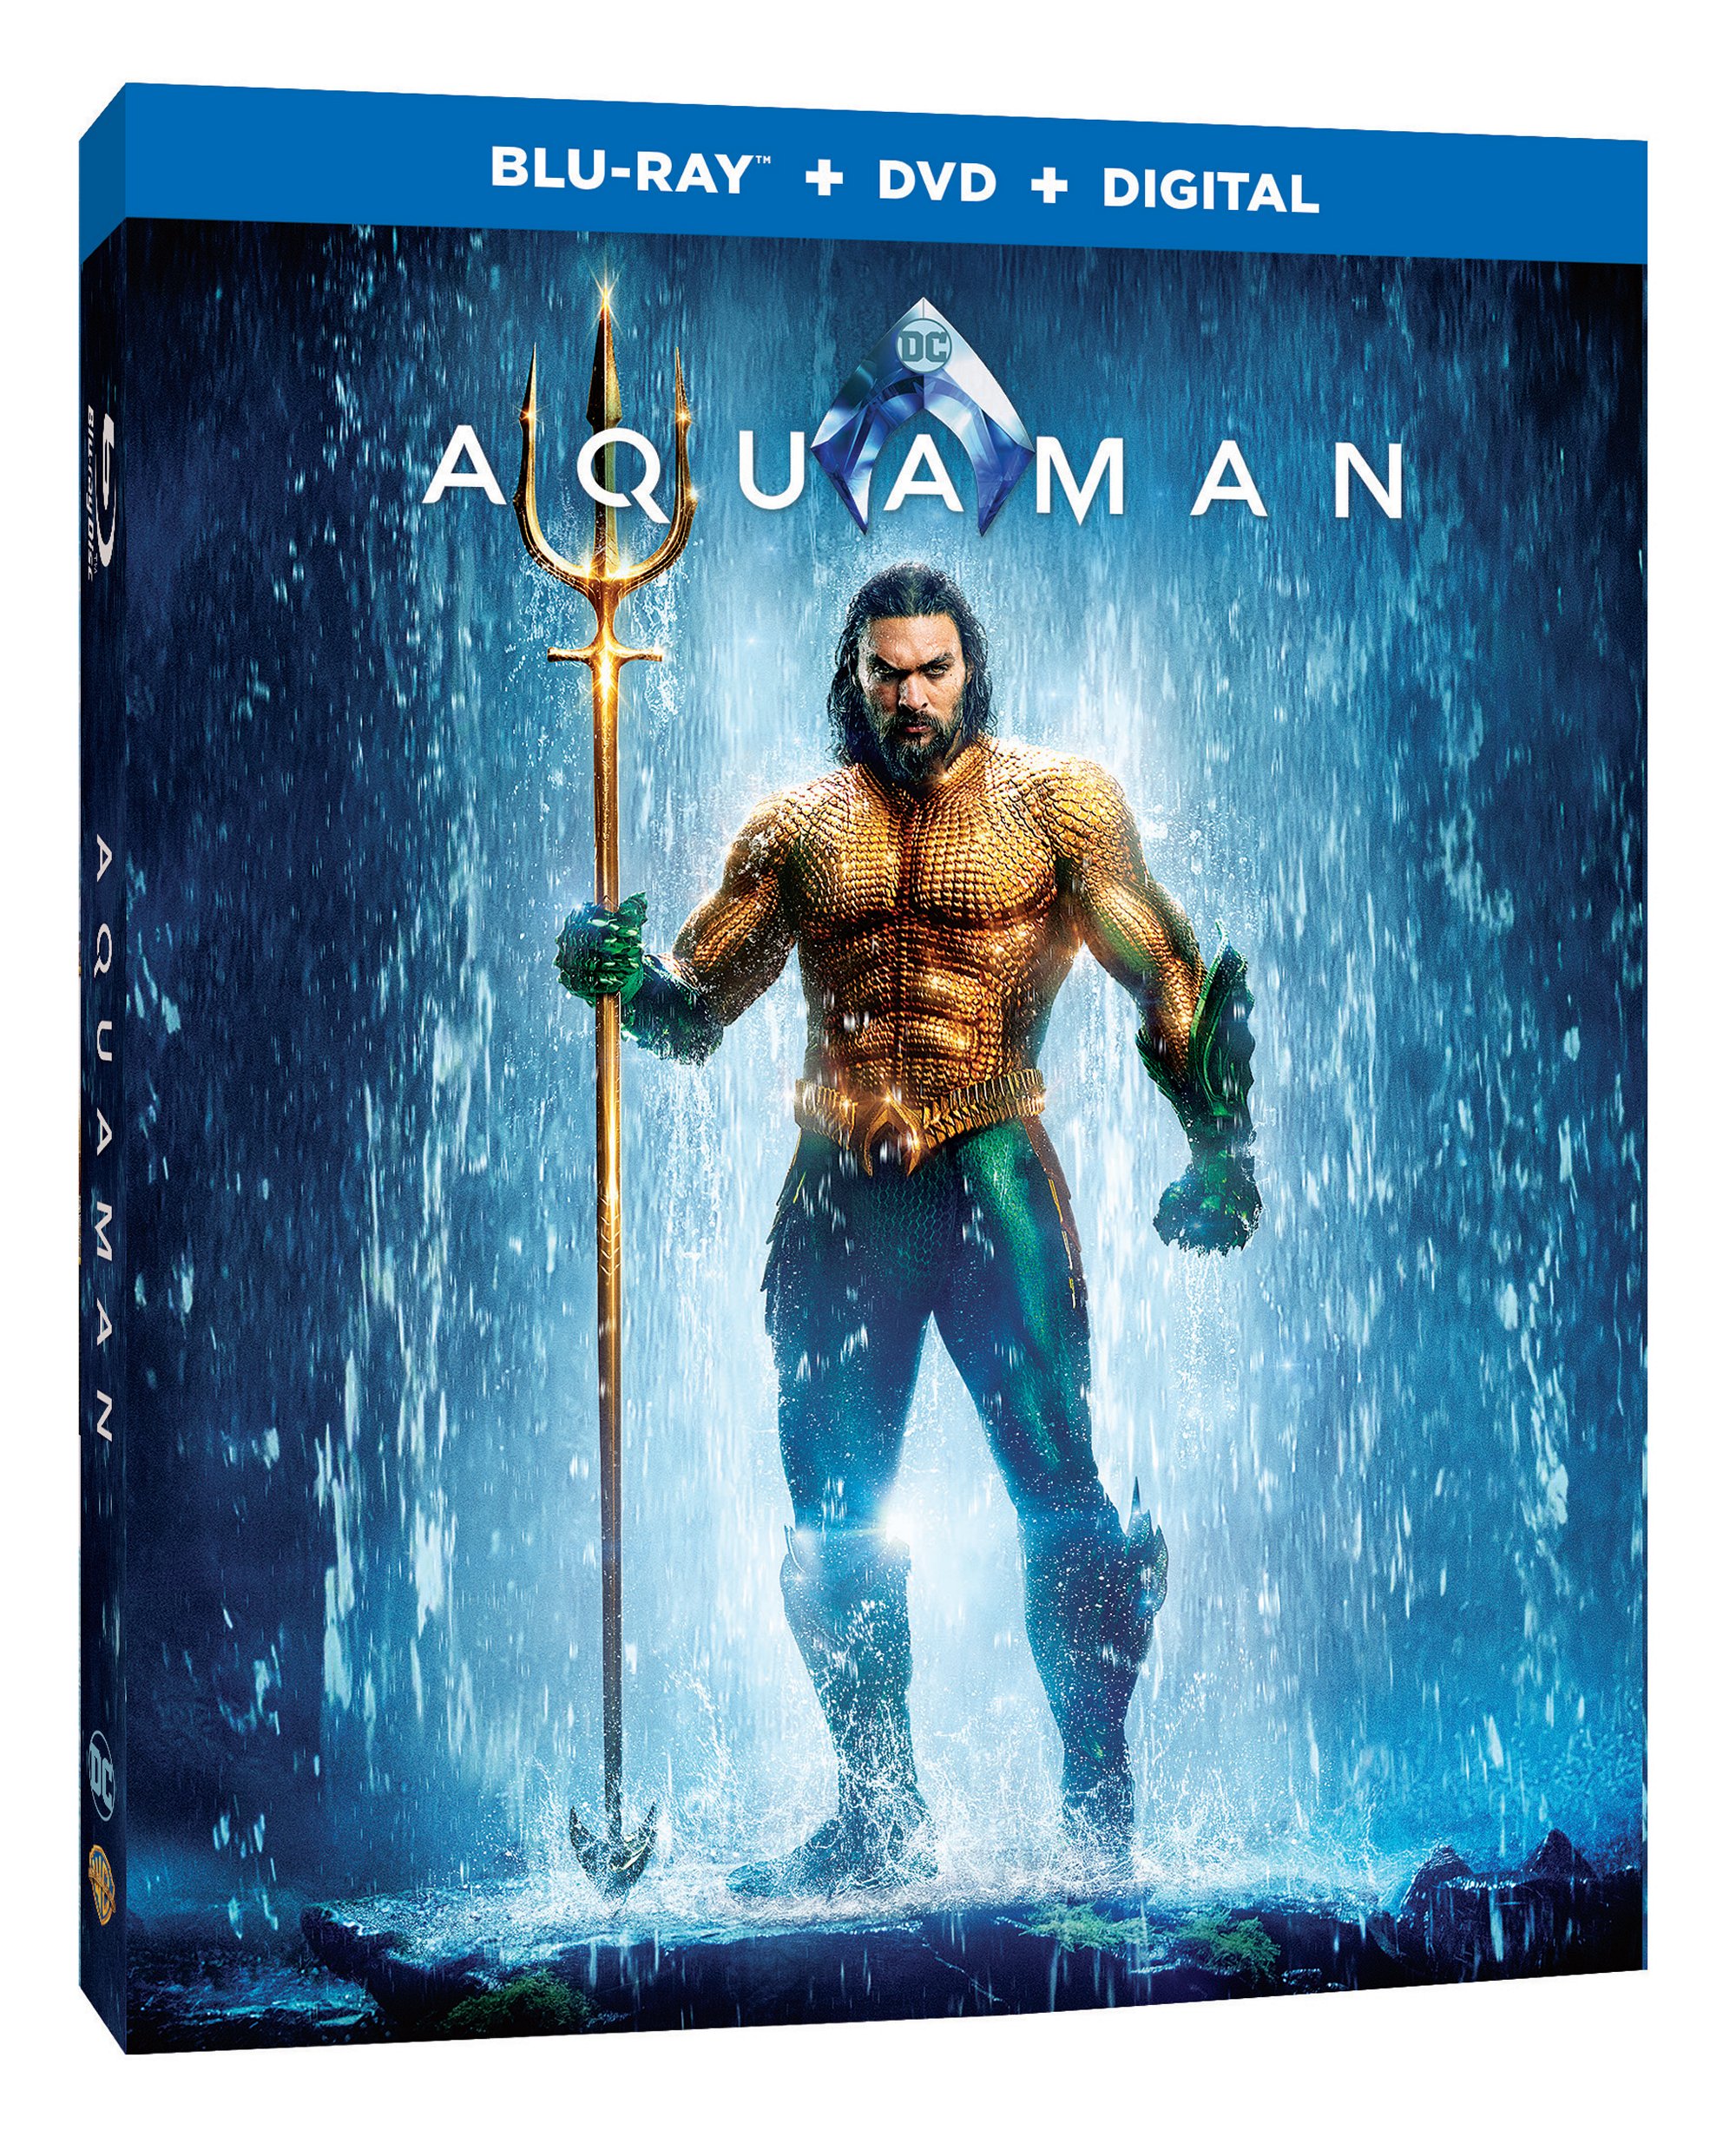 Aquaman Blu-Ray Combo Pack cover (Warner Bros. Home Entertainment)